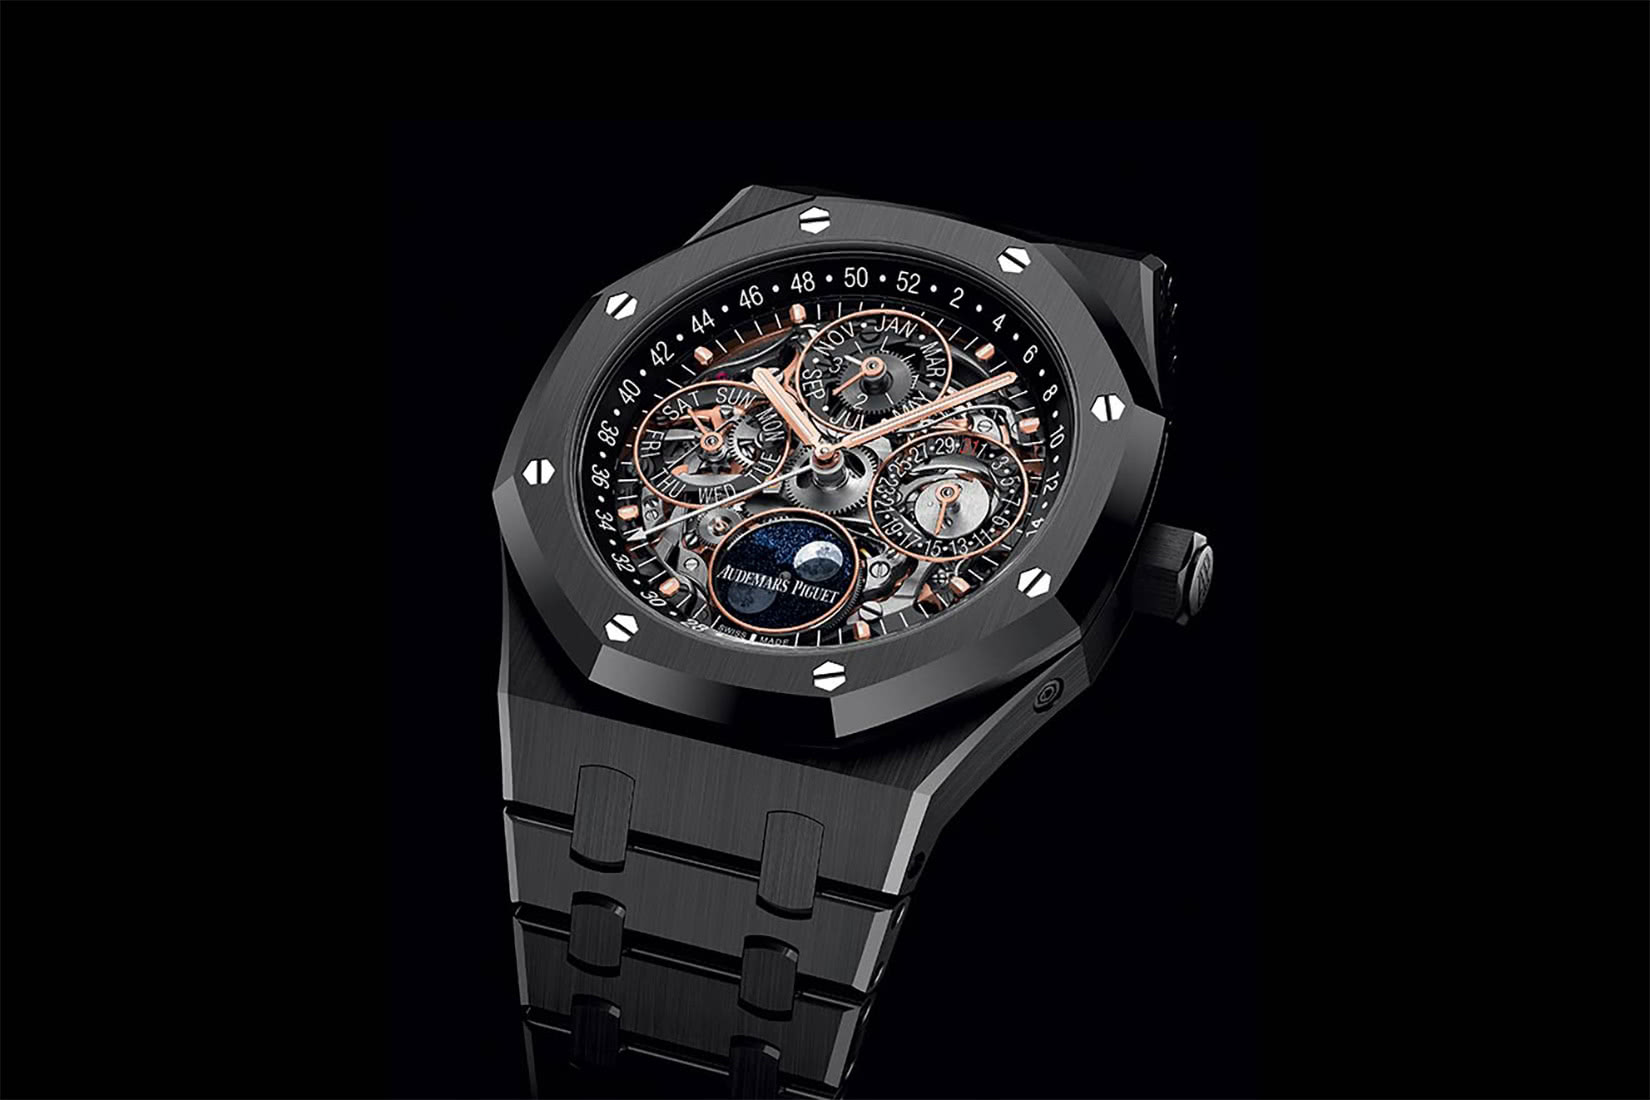 eBay luxury watch authenticity guarantee Audemars Piguet Royal Oak review - Luxe Digital